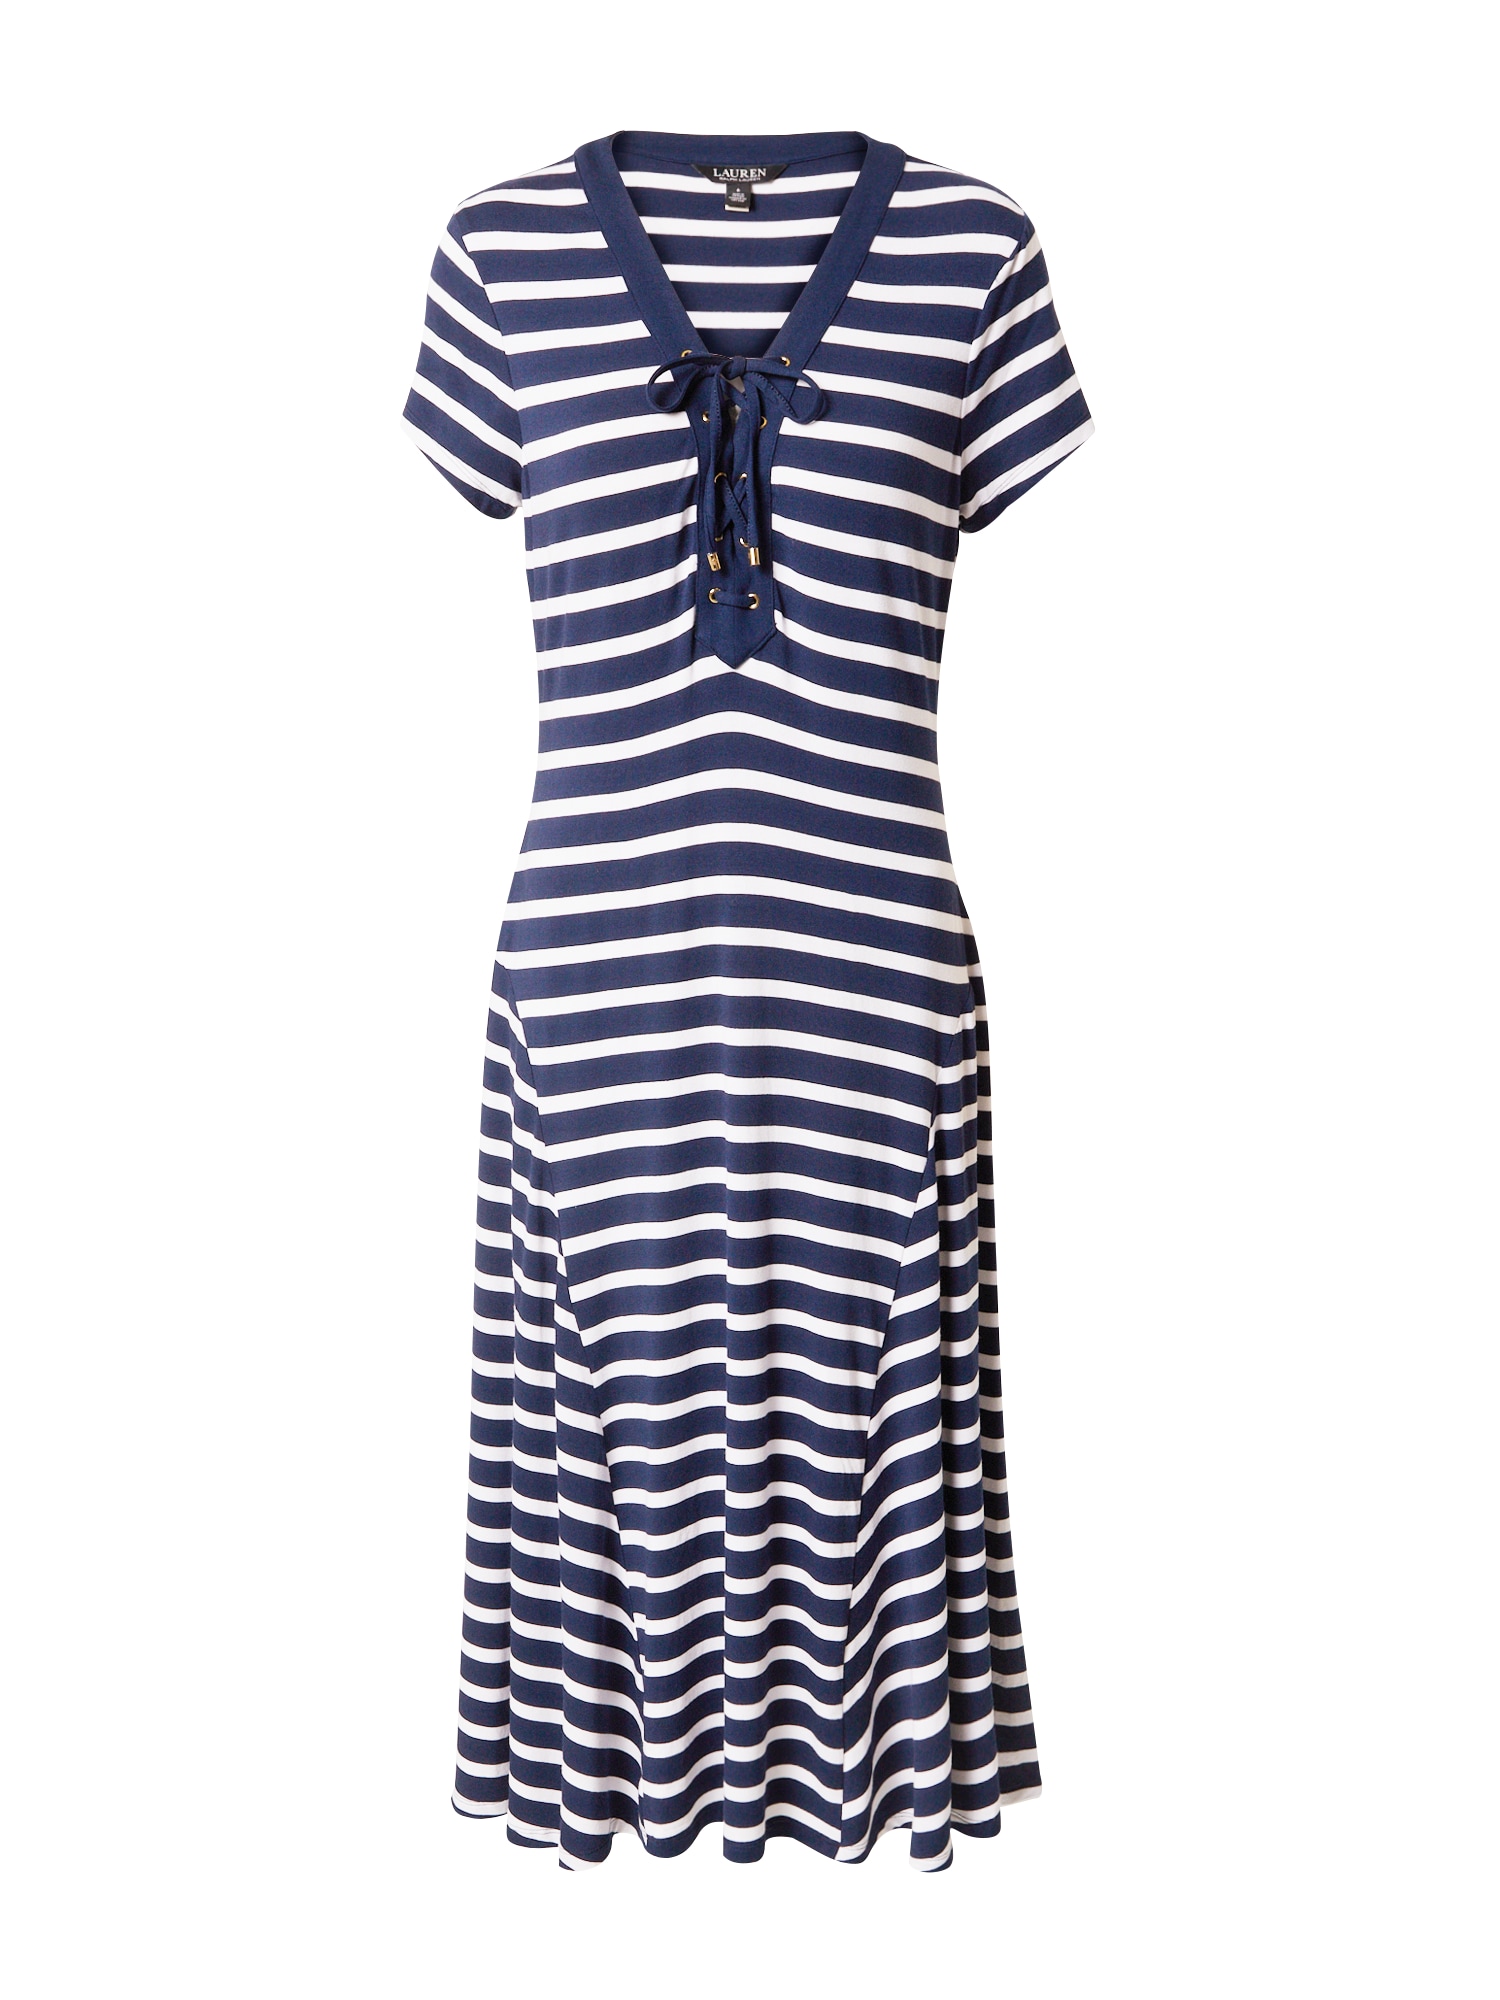 Letné šaty BRAYLEE námornícka modrá šedobiela Lauren Ralph Lauren